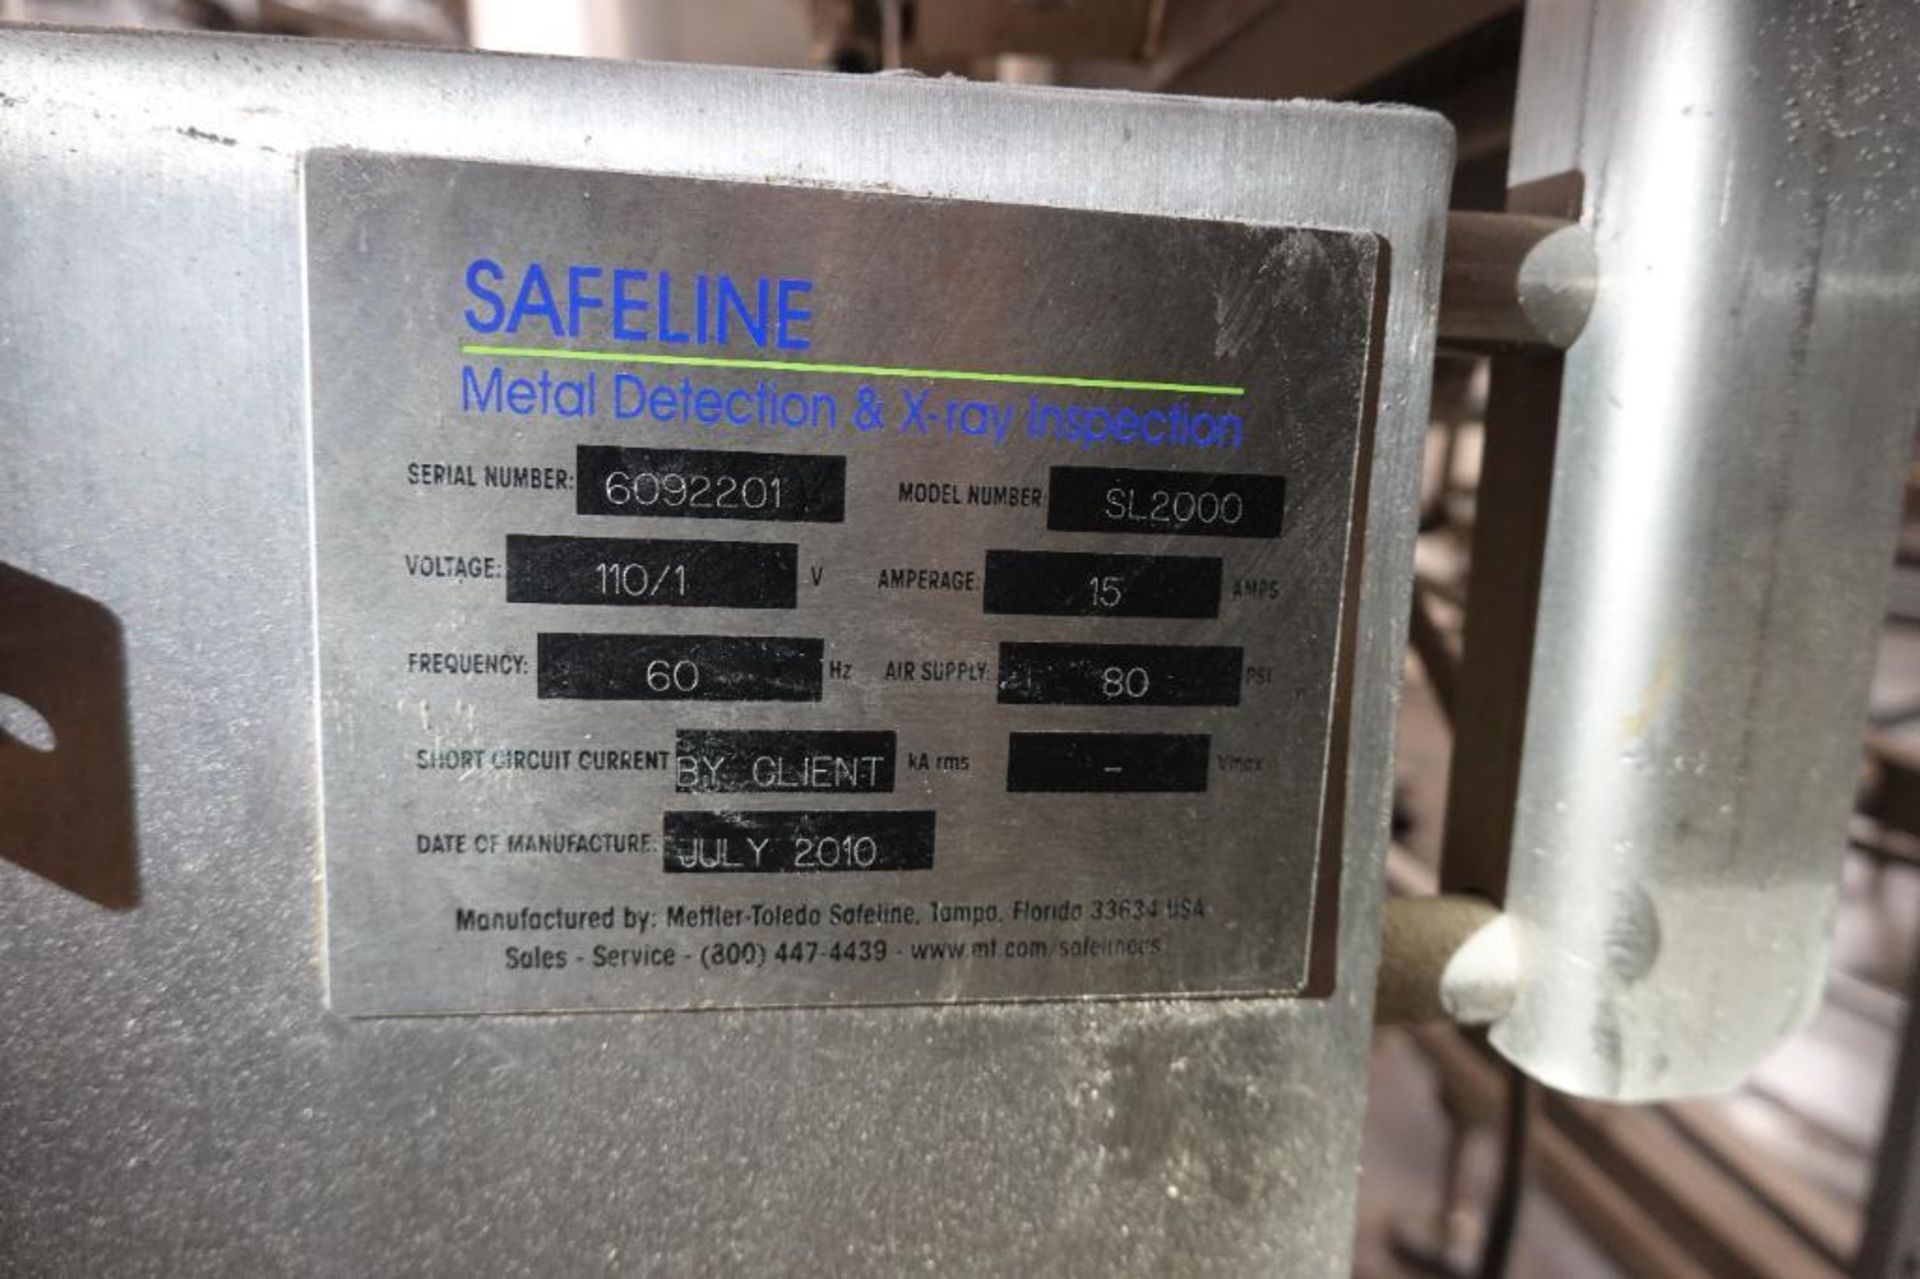 2010 Safeline Certus metal detector with conveyor - Image 10 of 11